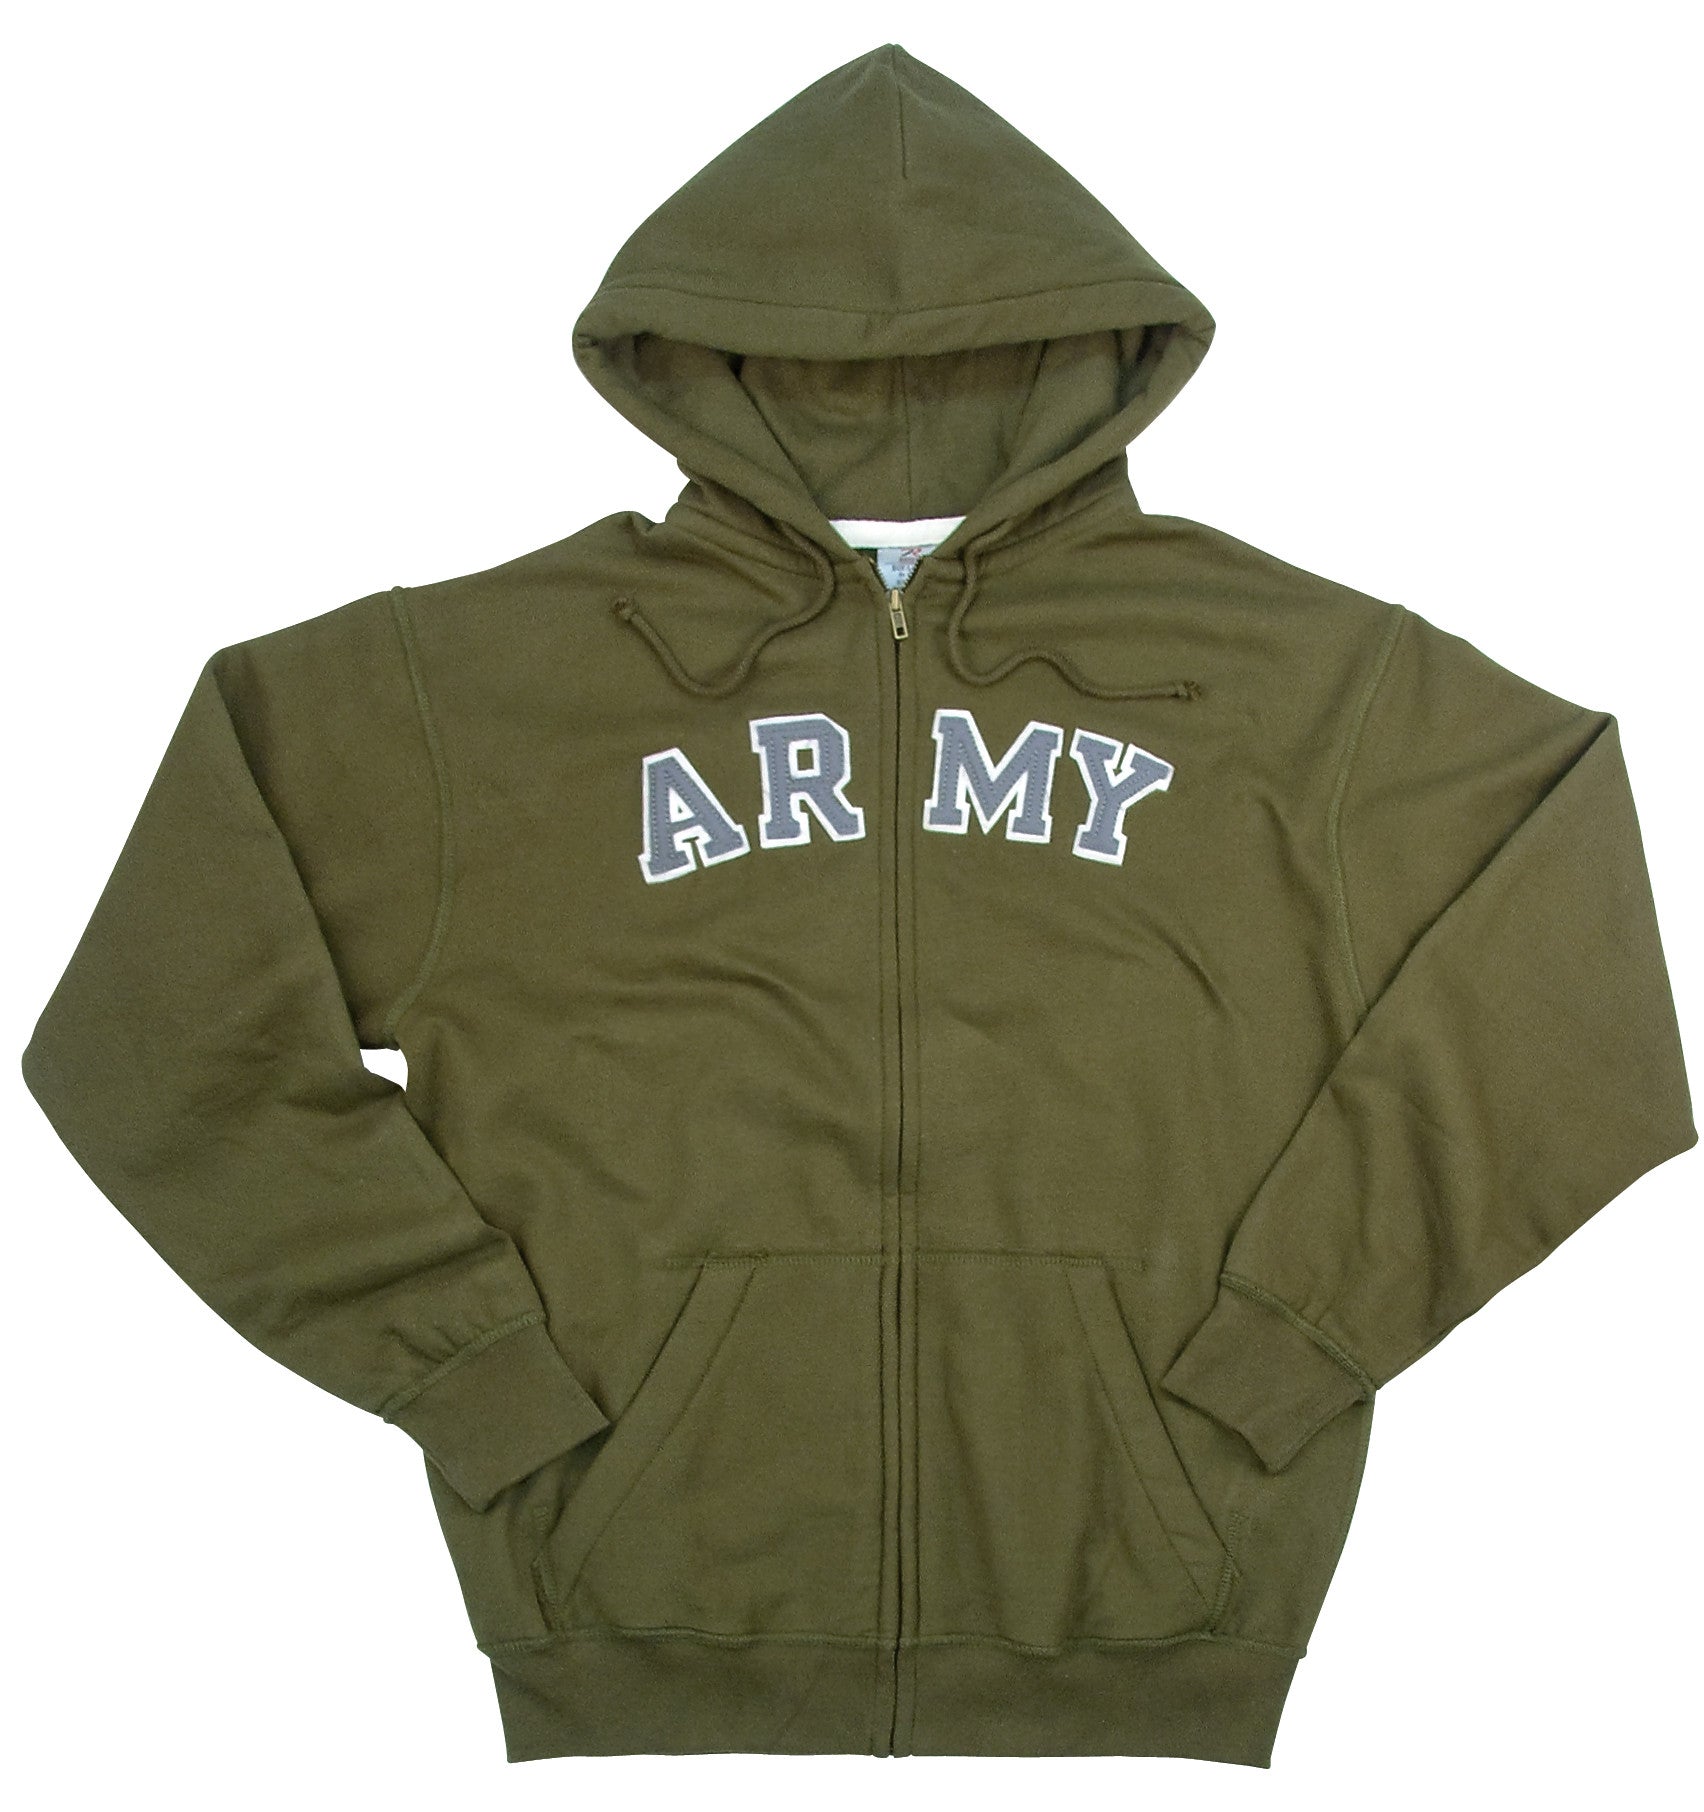 Army Zip Up Hoodie - Army Military